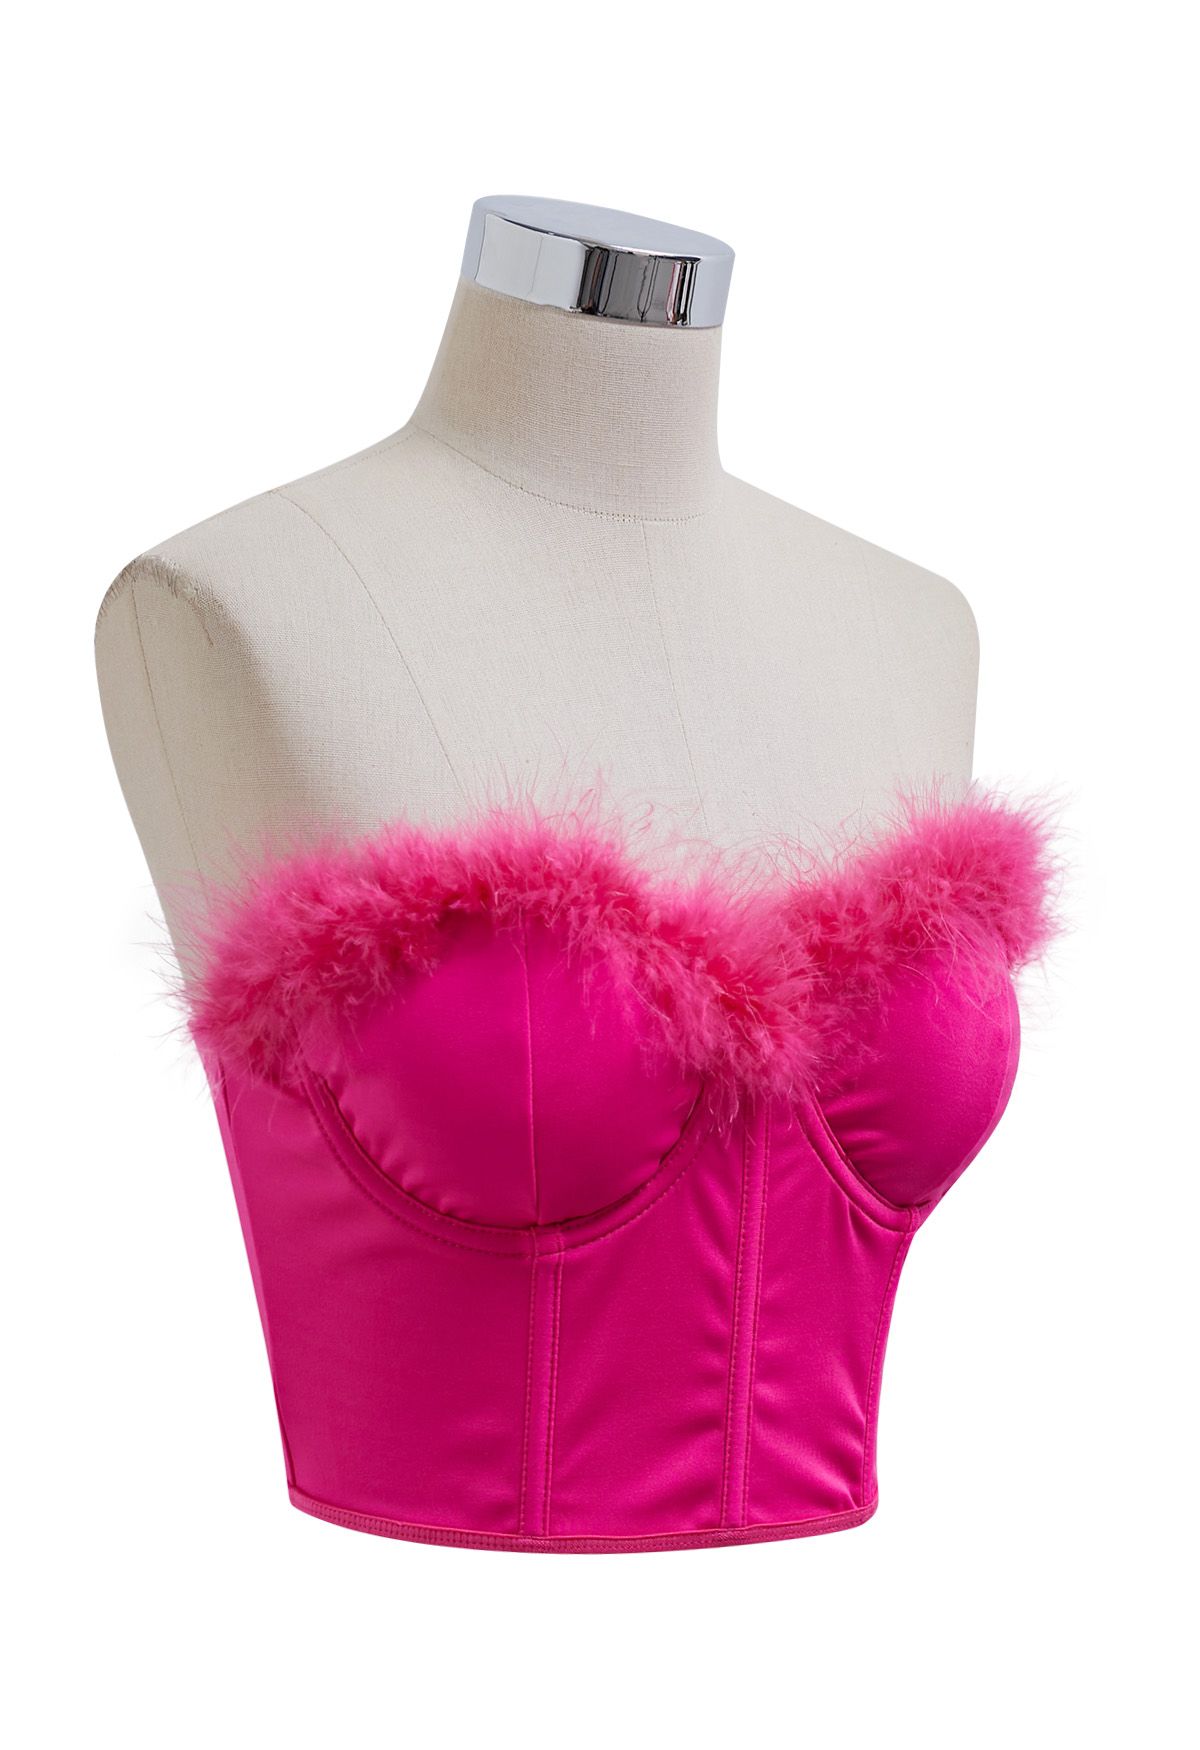 Feather Trim Bustier Crop Top in Hot Pink